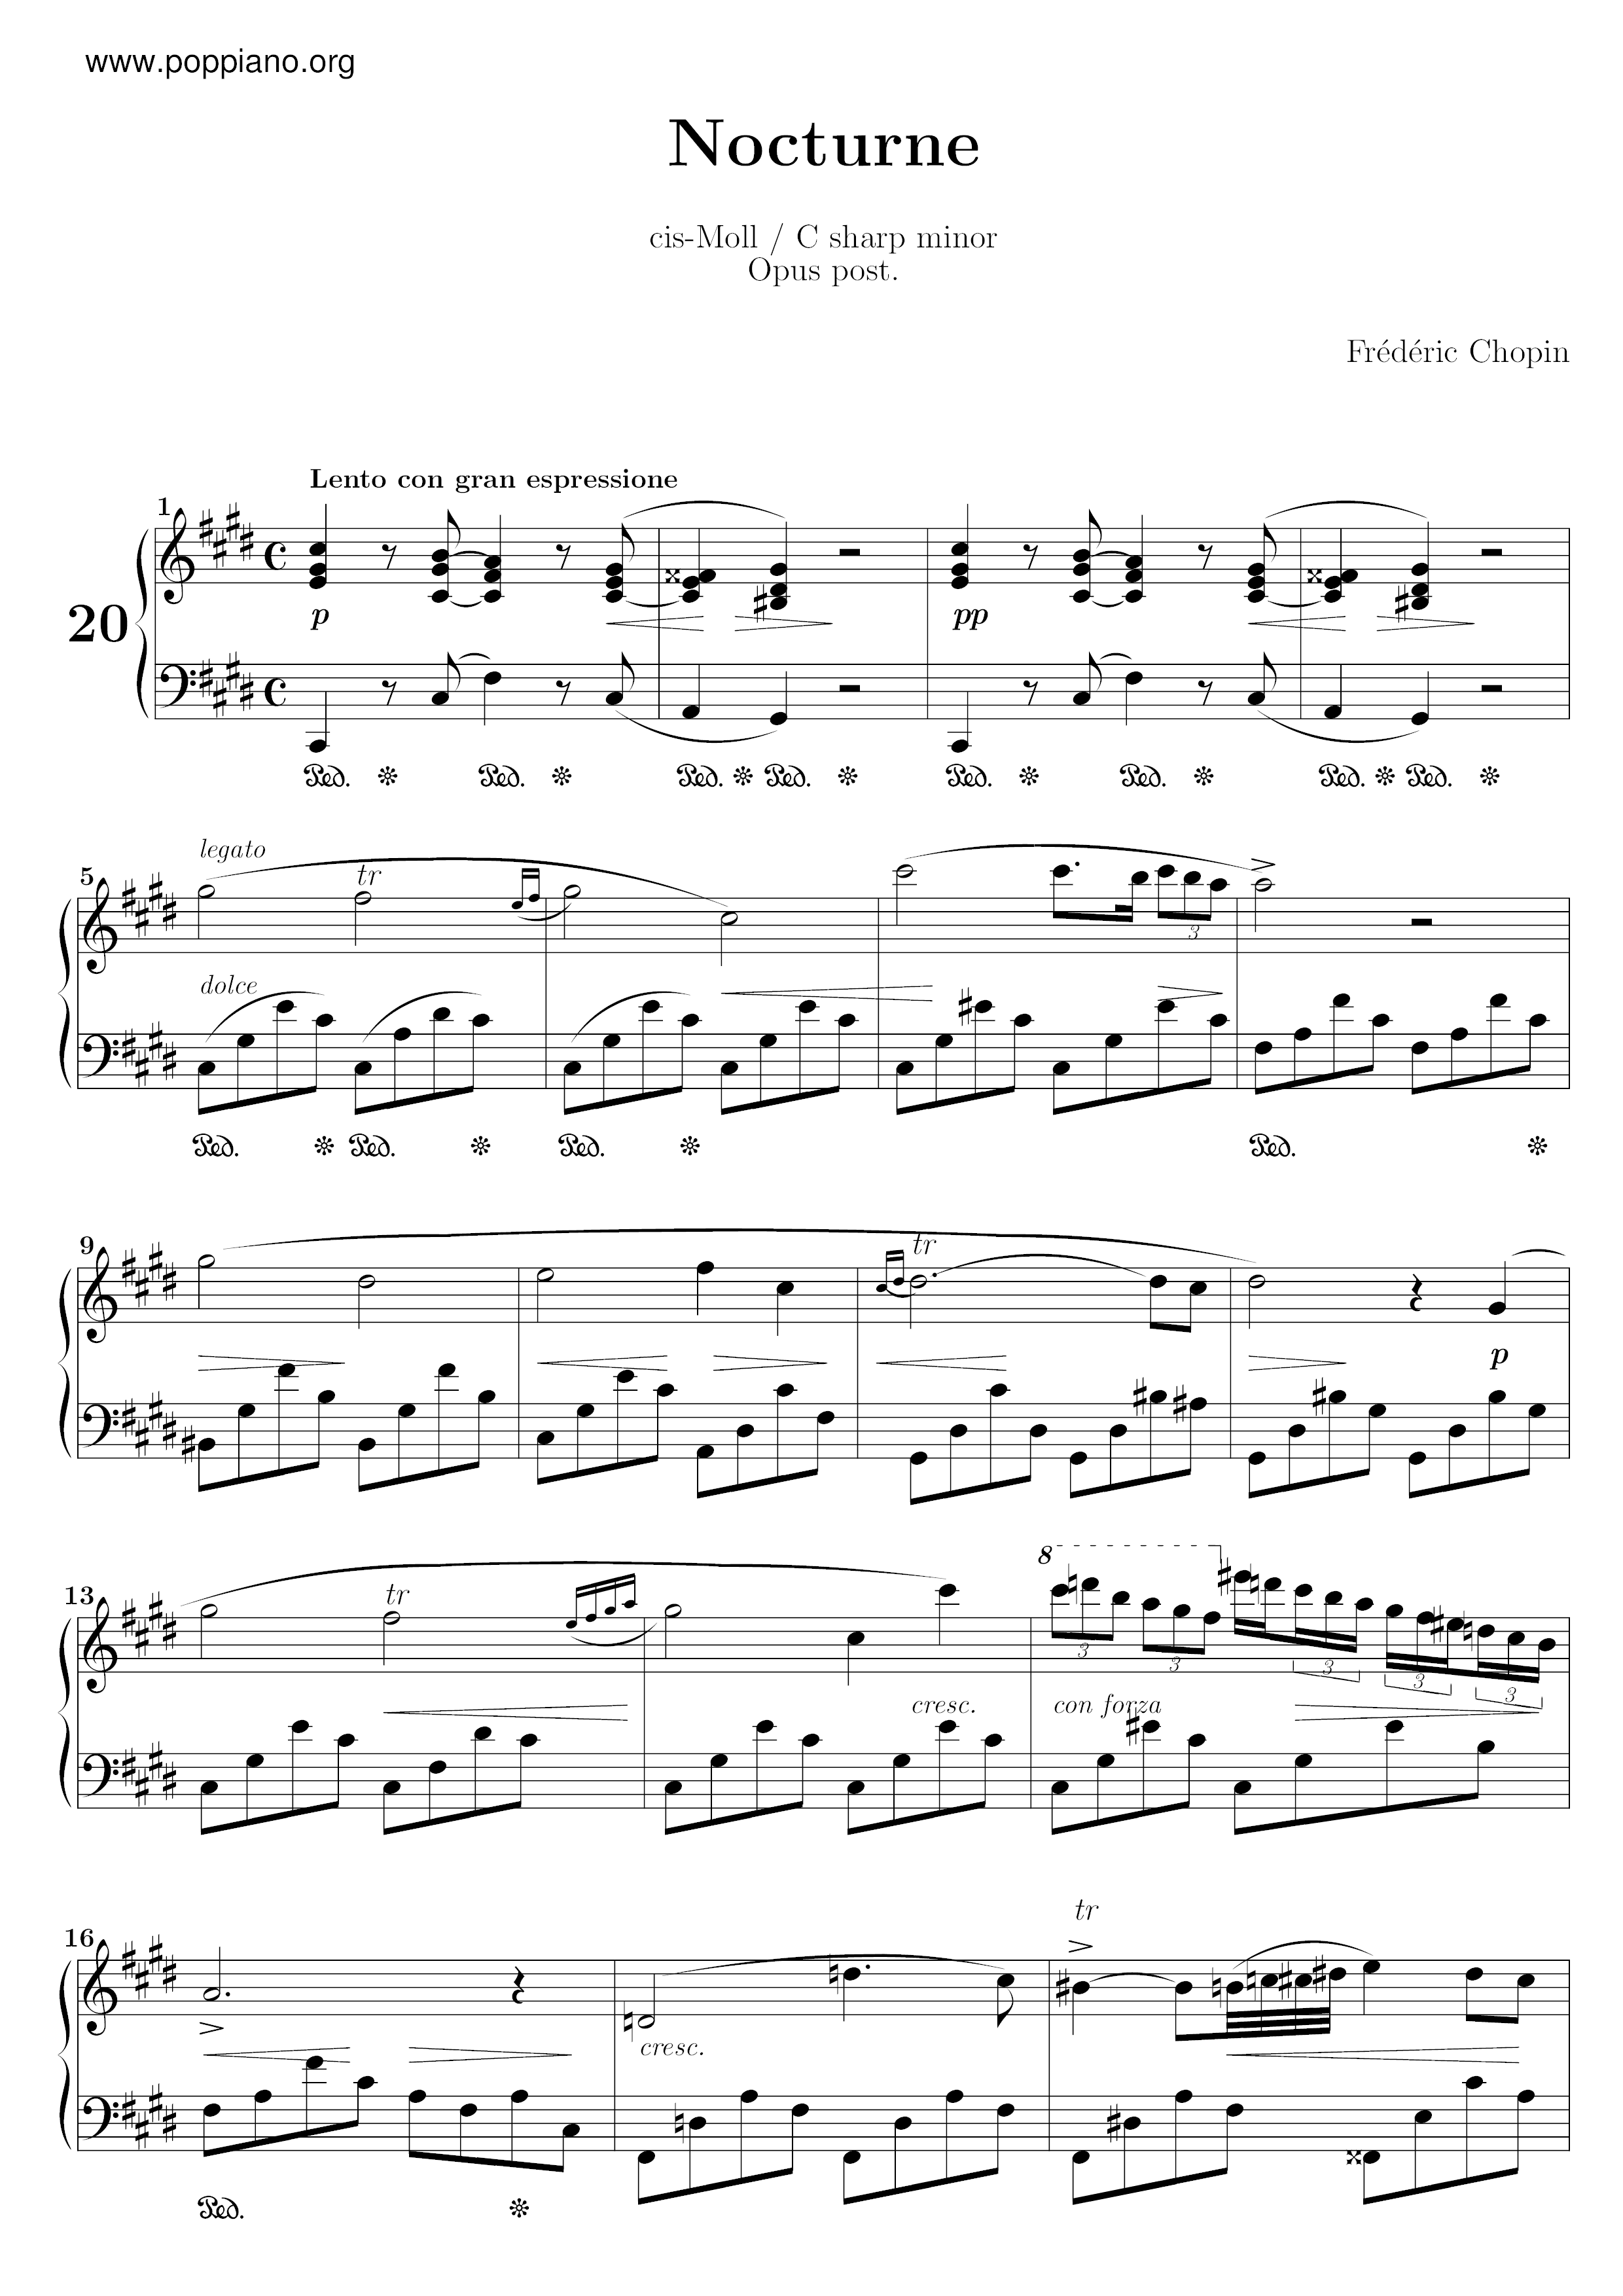 Chopin: Nocturne No. 20 in C-Sharp Minor, Op. Posth. Score